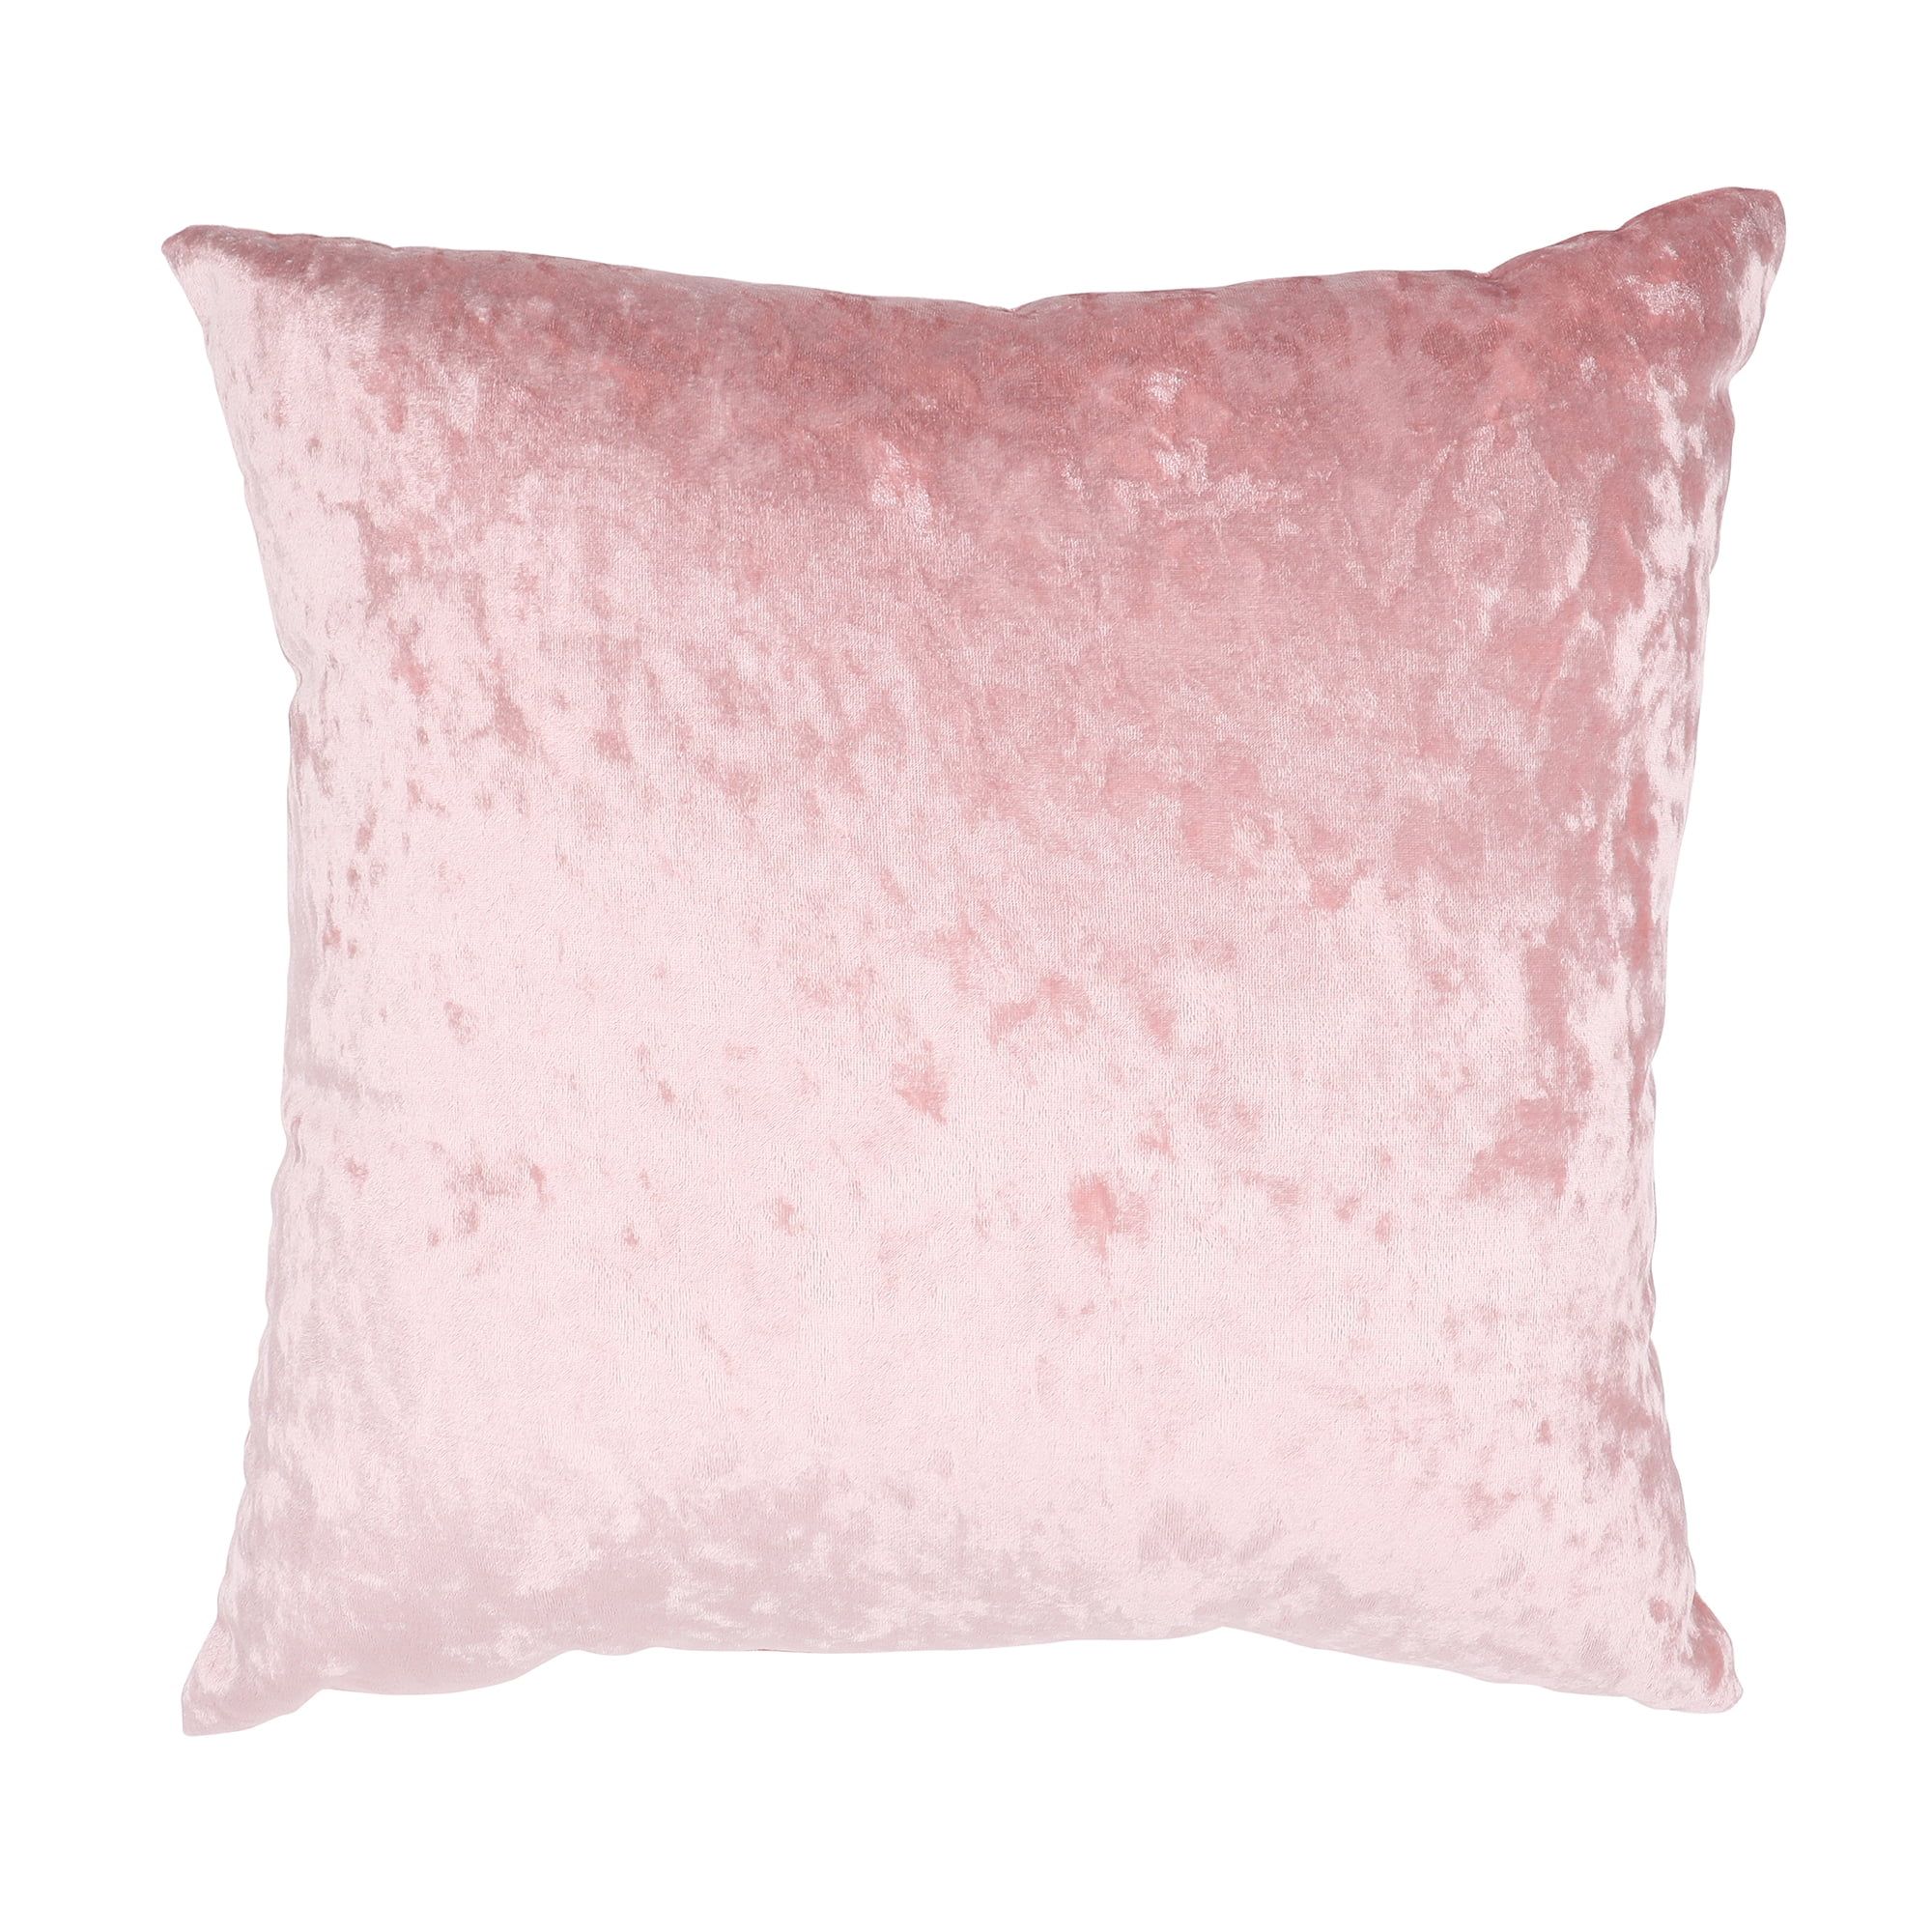 Mainstays Crushed Velvet Square Decorative Throw Pillow, 18" x 18", Blush Pink | Walmart (US)